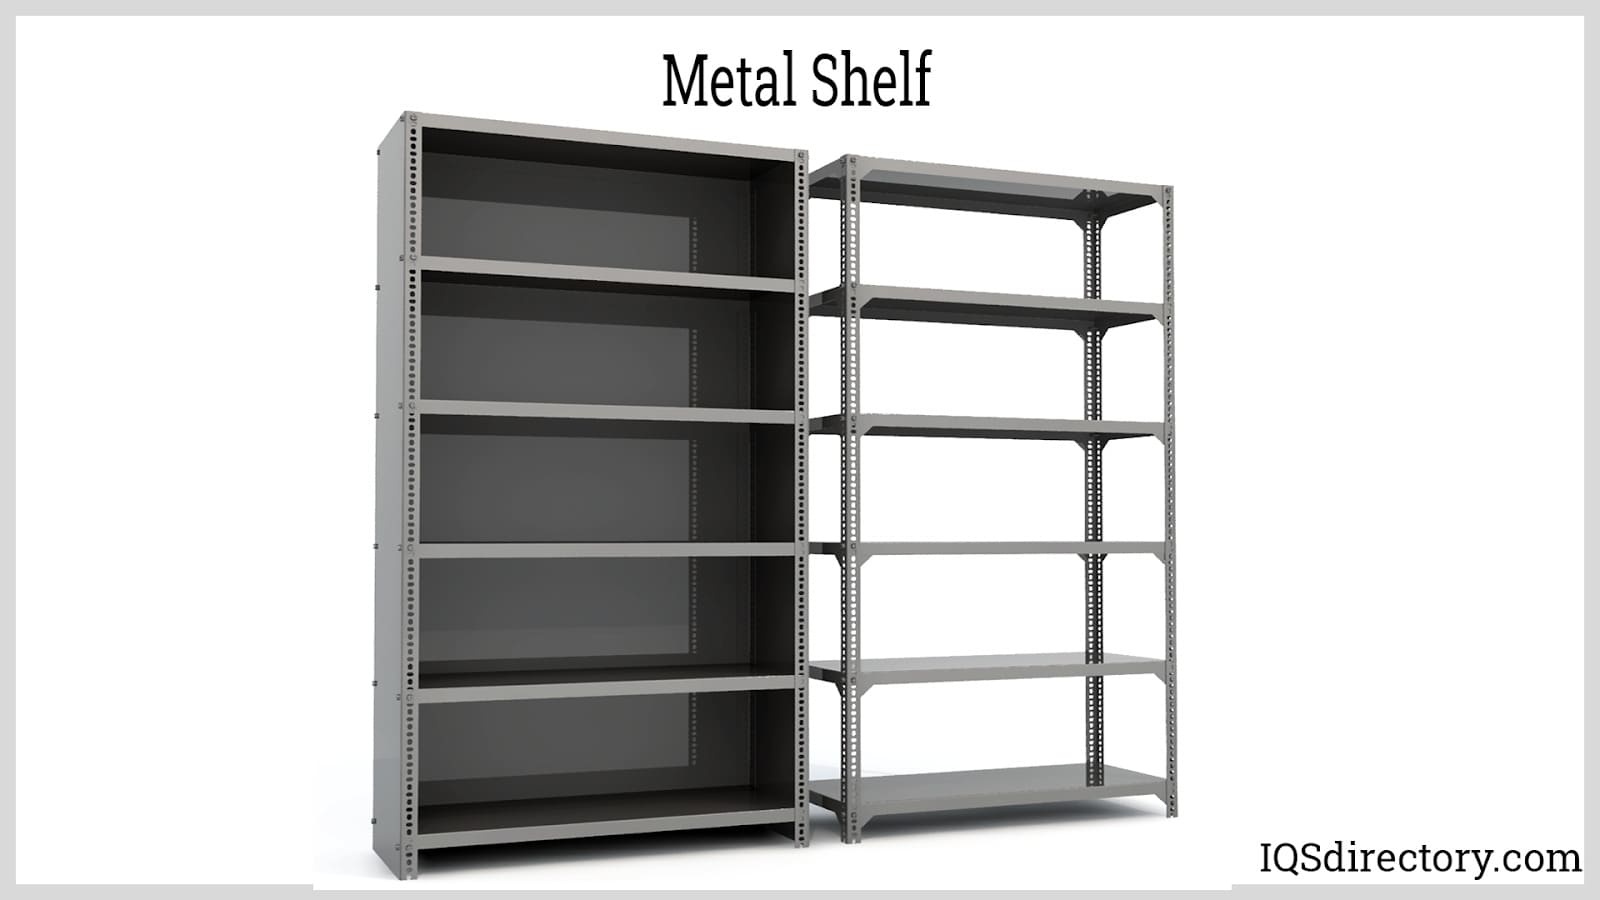 Image result for contemporary stainless steel shelving  Kitchen shelf  design, Stainless steel kitchen shelves, Kitchen wall shelves